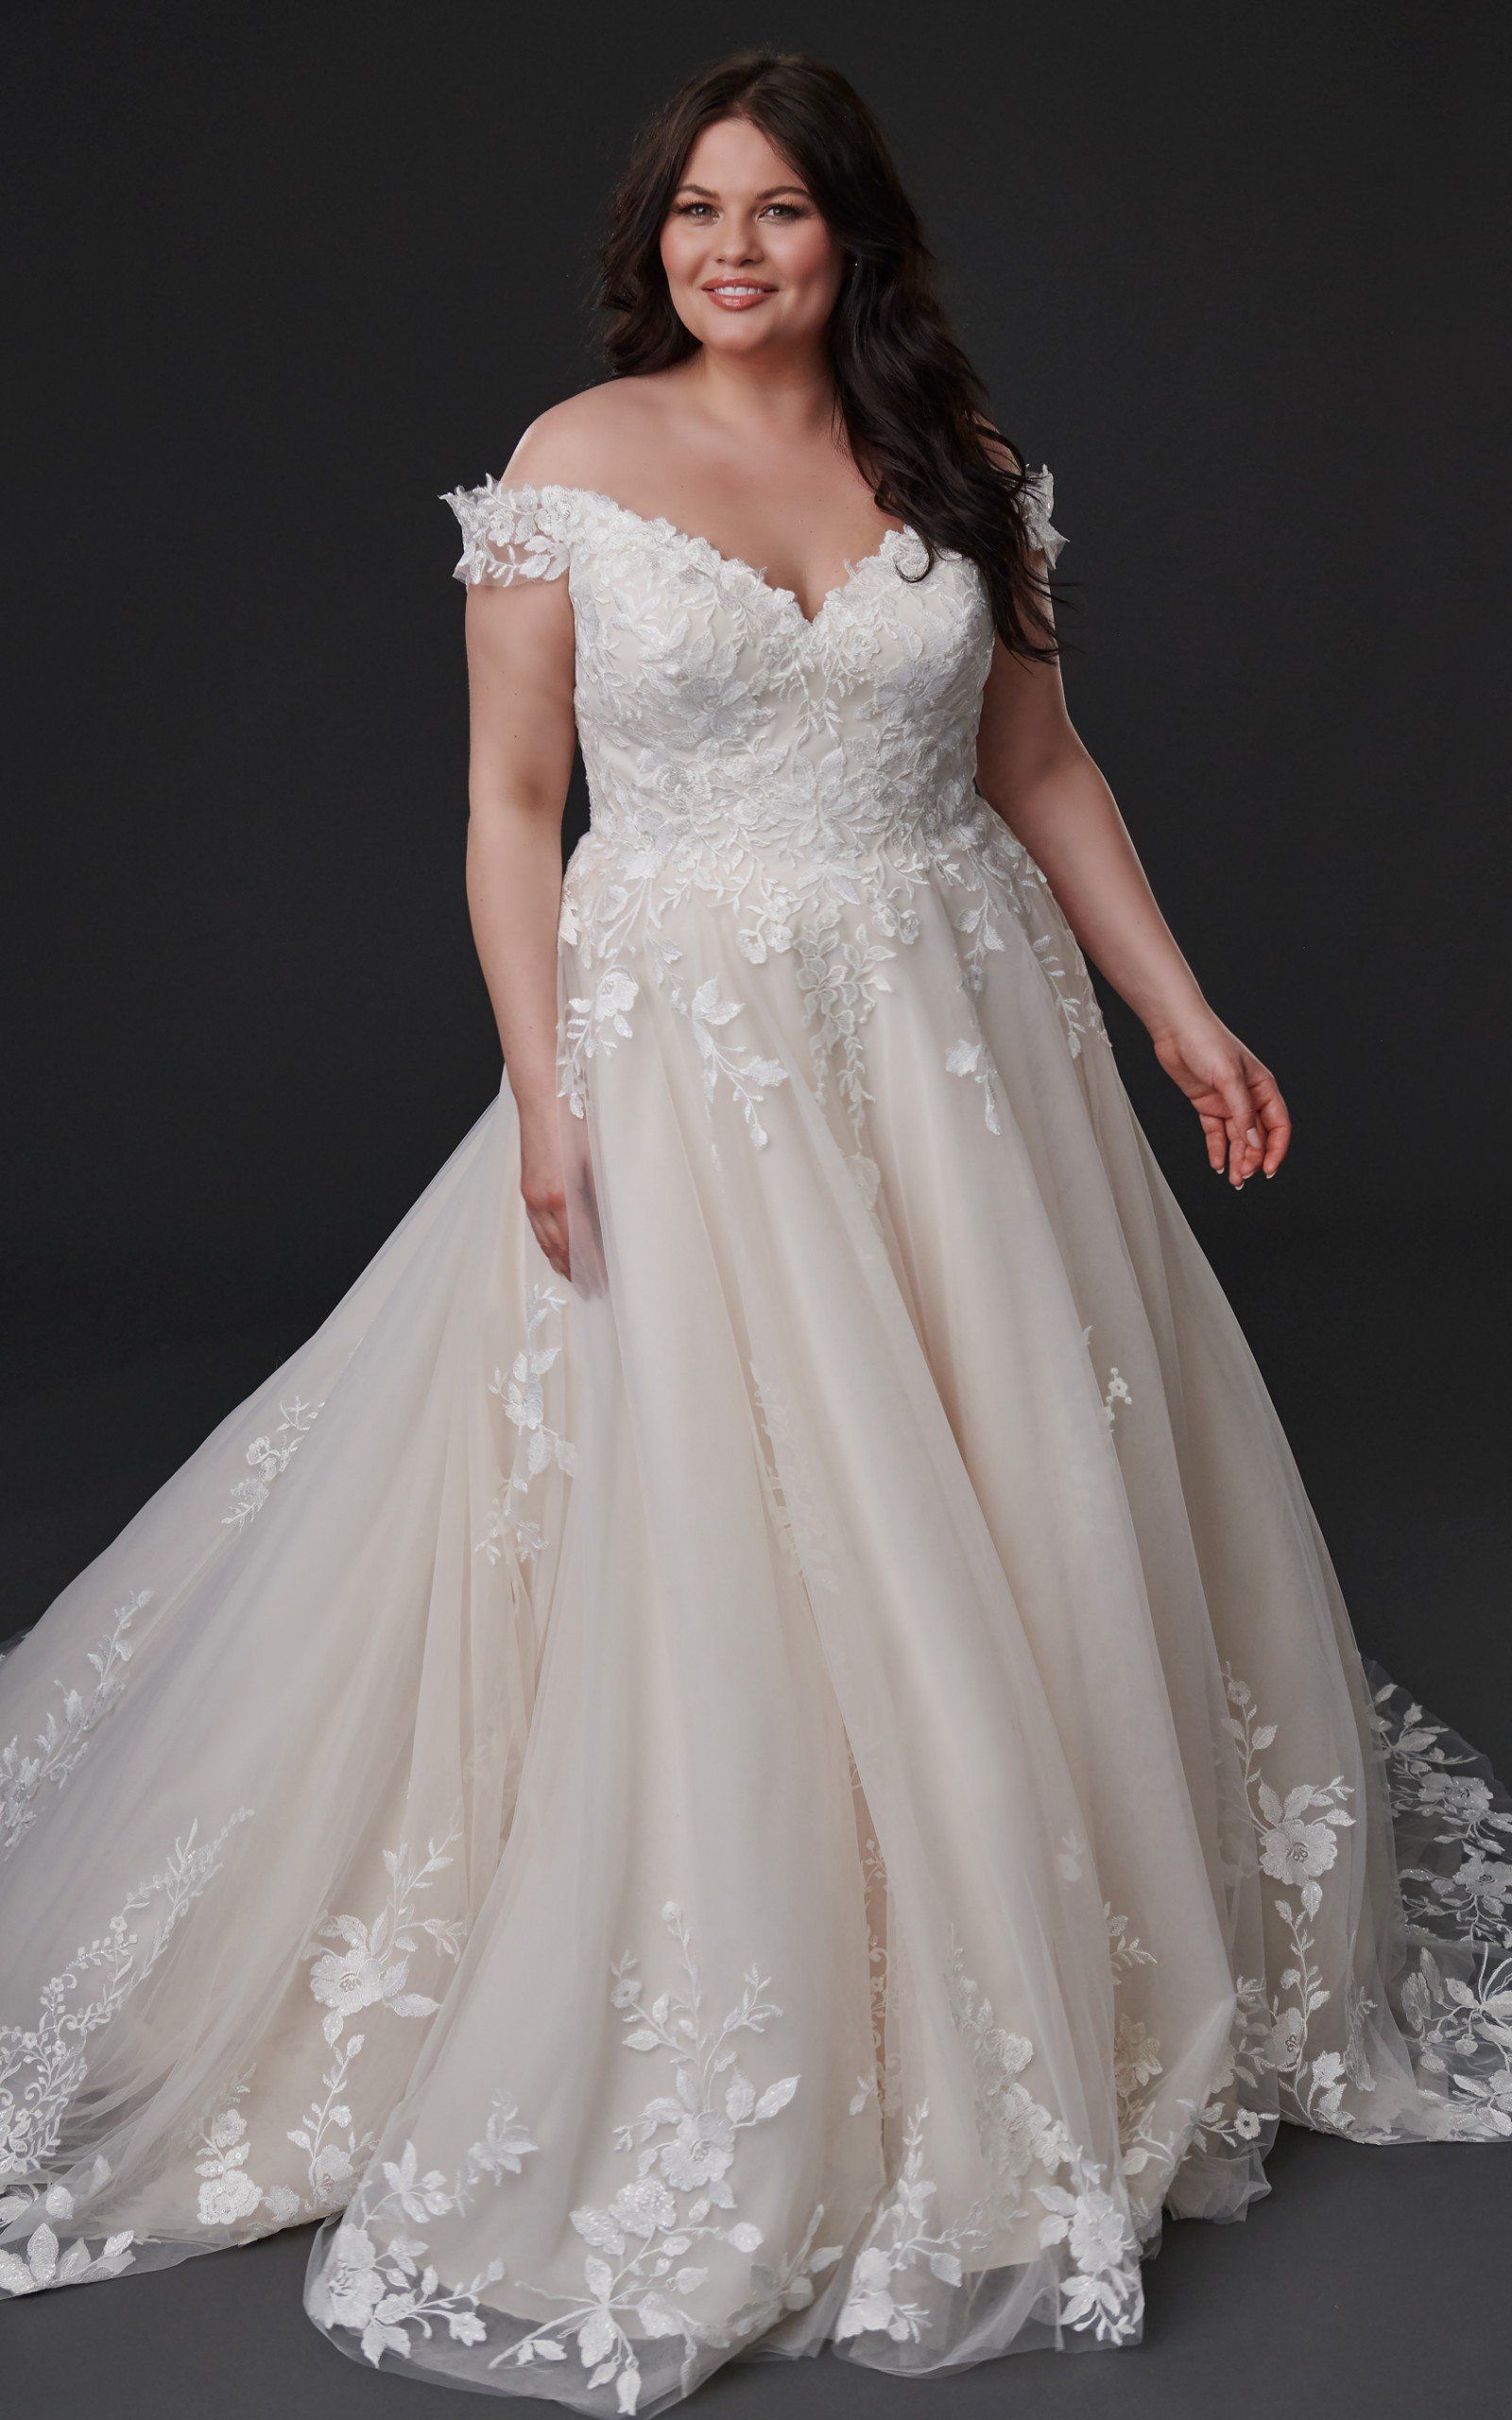 Eddy K Plus Size Bridal Gowns | Wedding Dresses Price